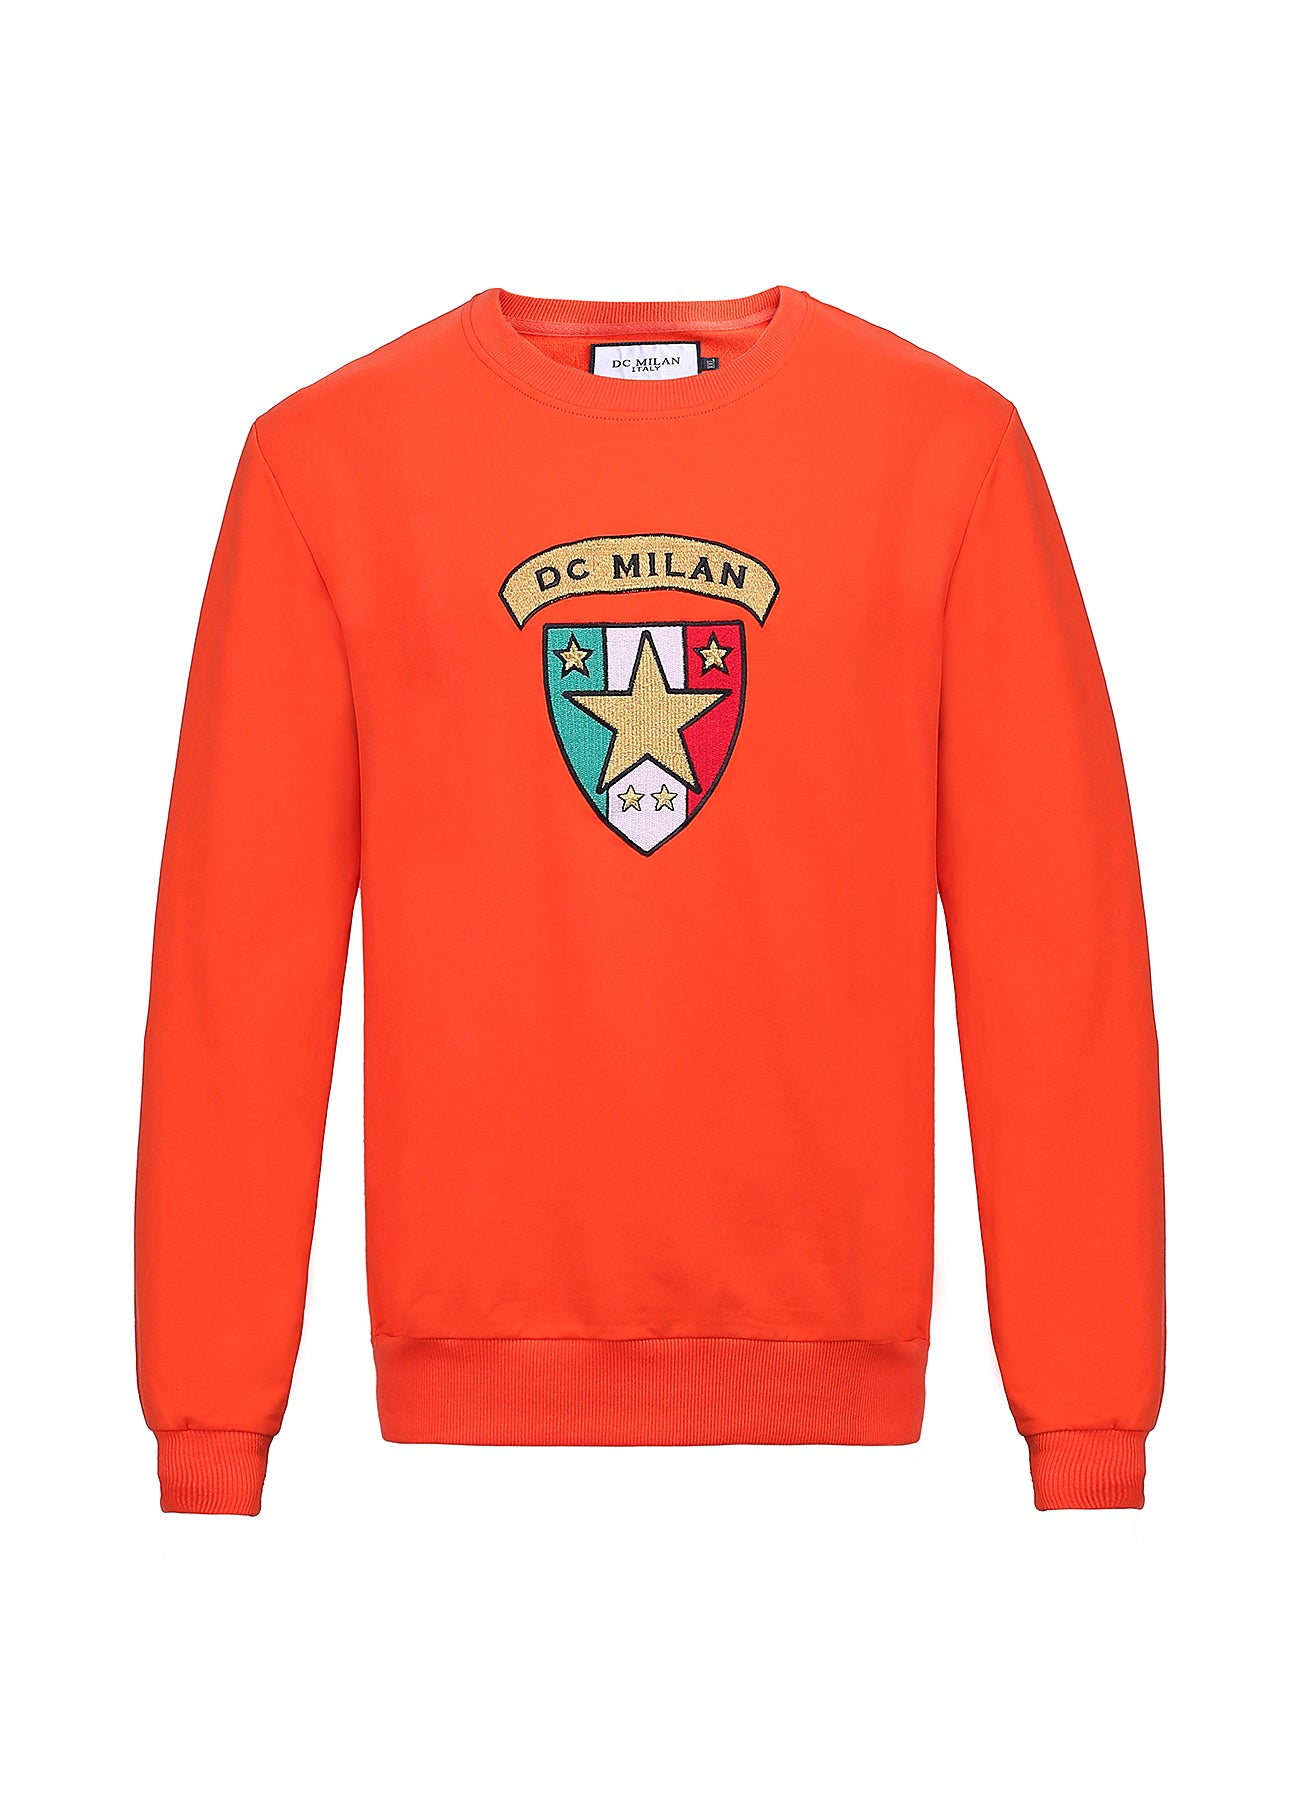 Embroidery Orange Cotton Sweatshirt With Big Logo